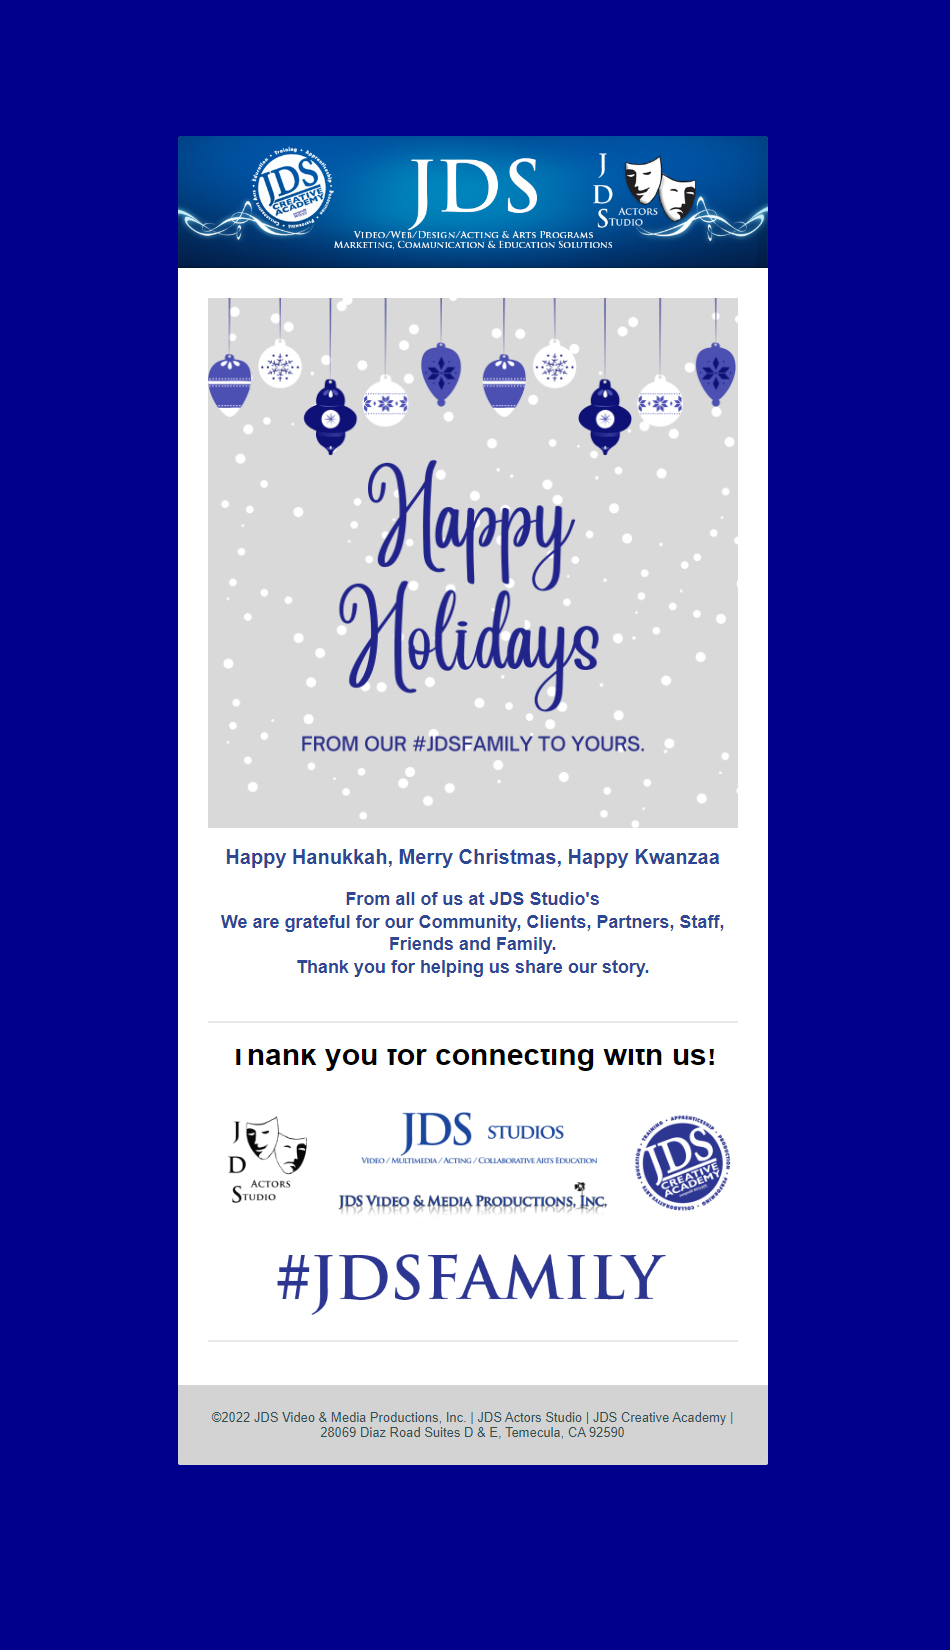 JDS Family - Wishing you Happy Holidays